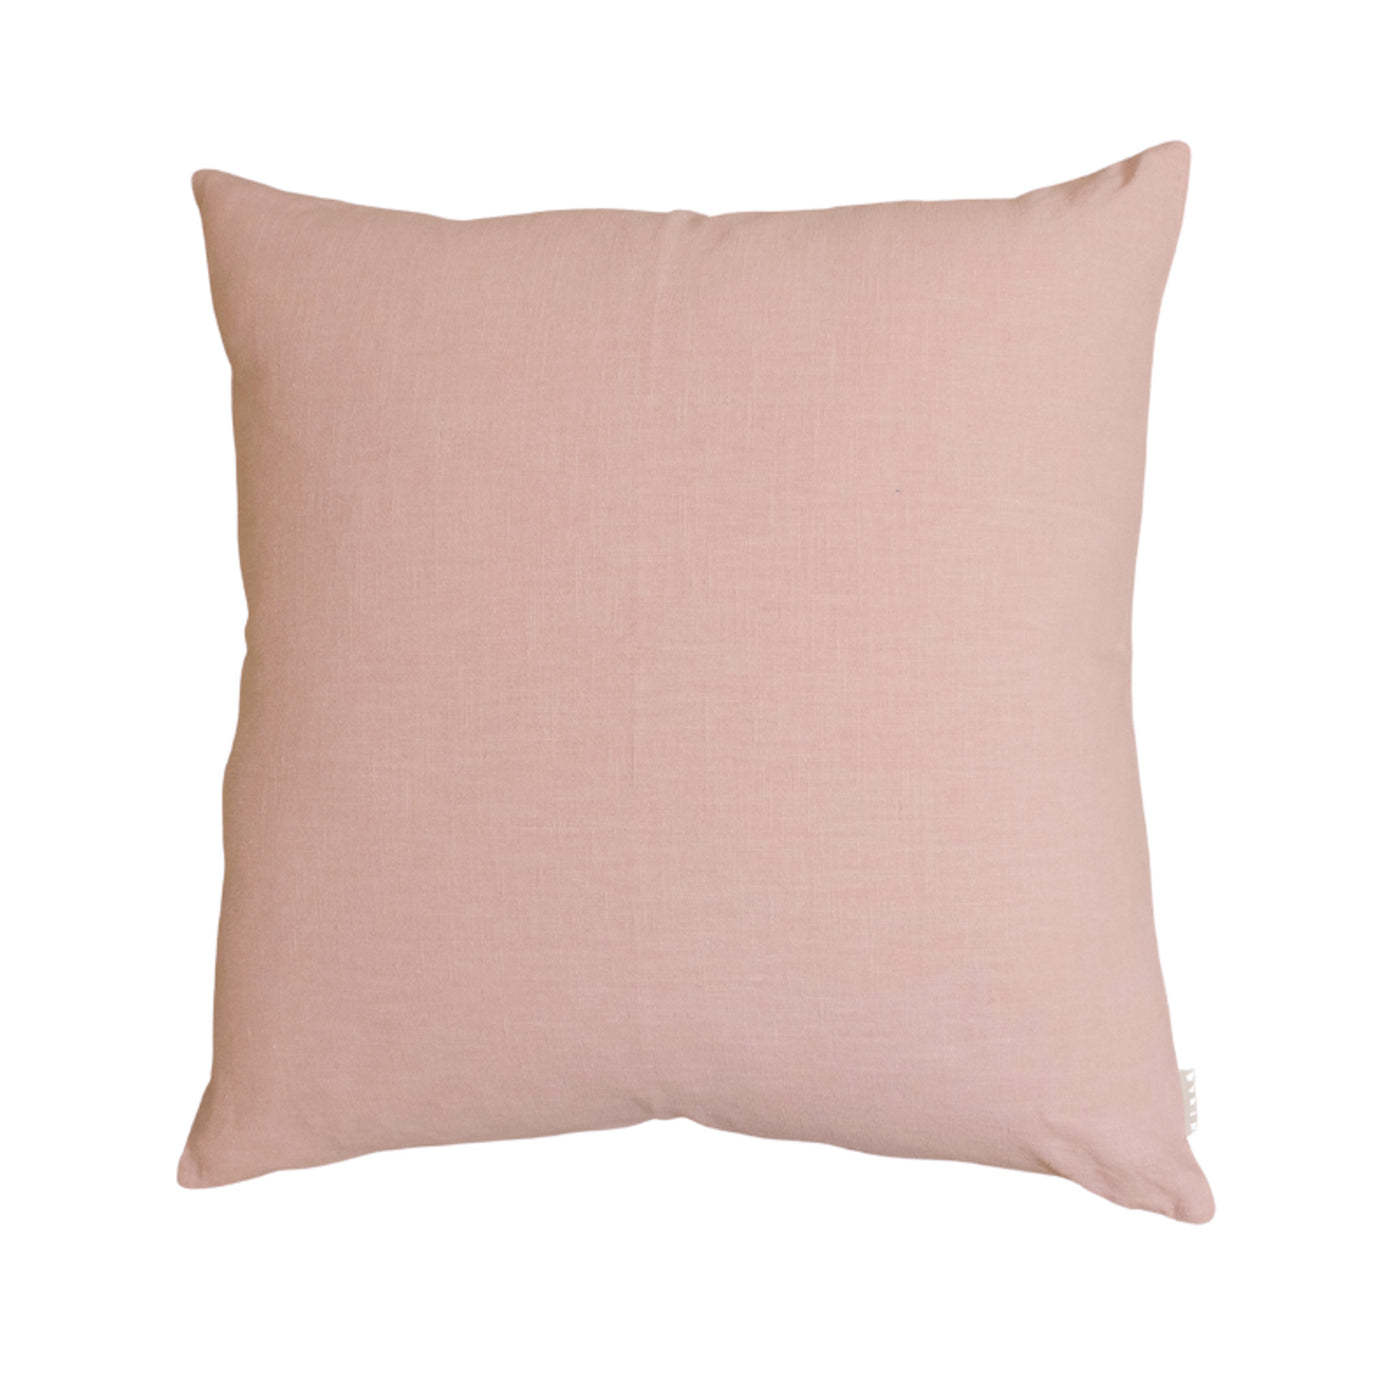 Dusty Rose Sarina Linen/Cotton Pillow